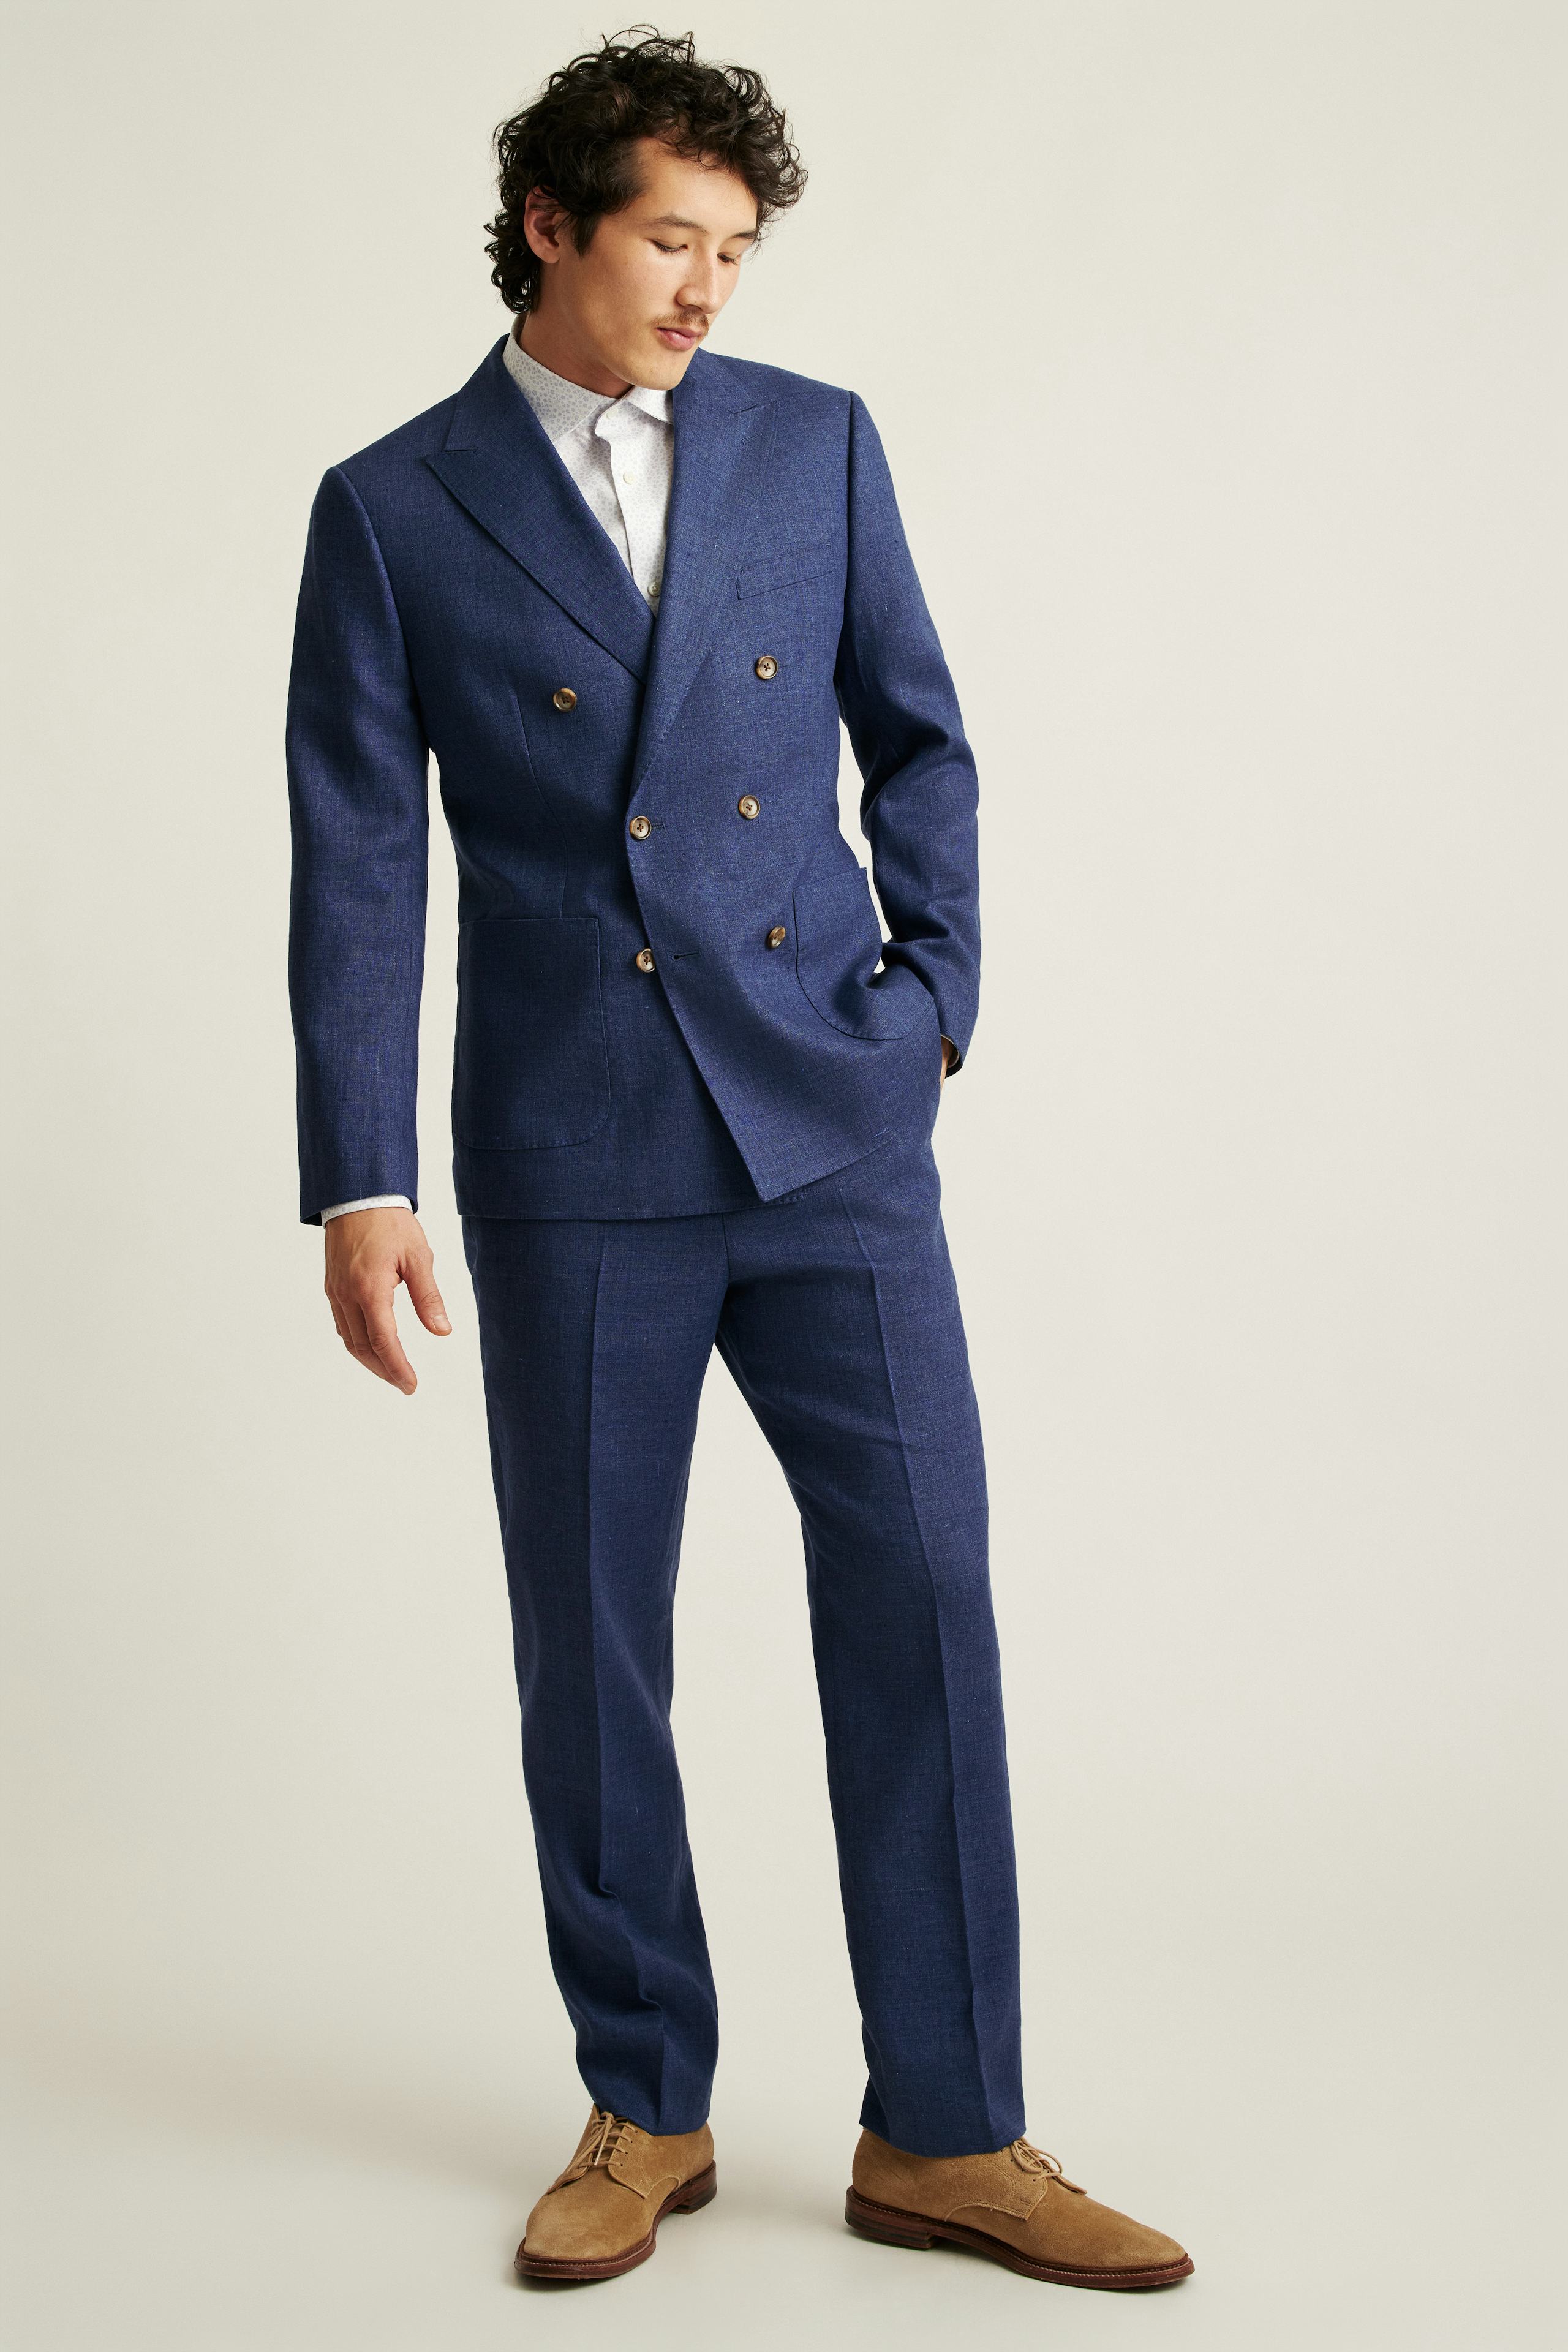 Jetsetter Italian Linen Double Breasted Suit